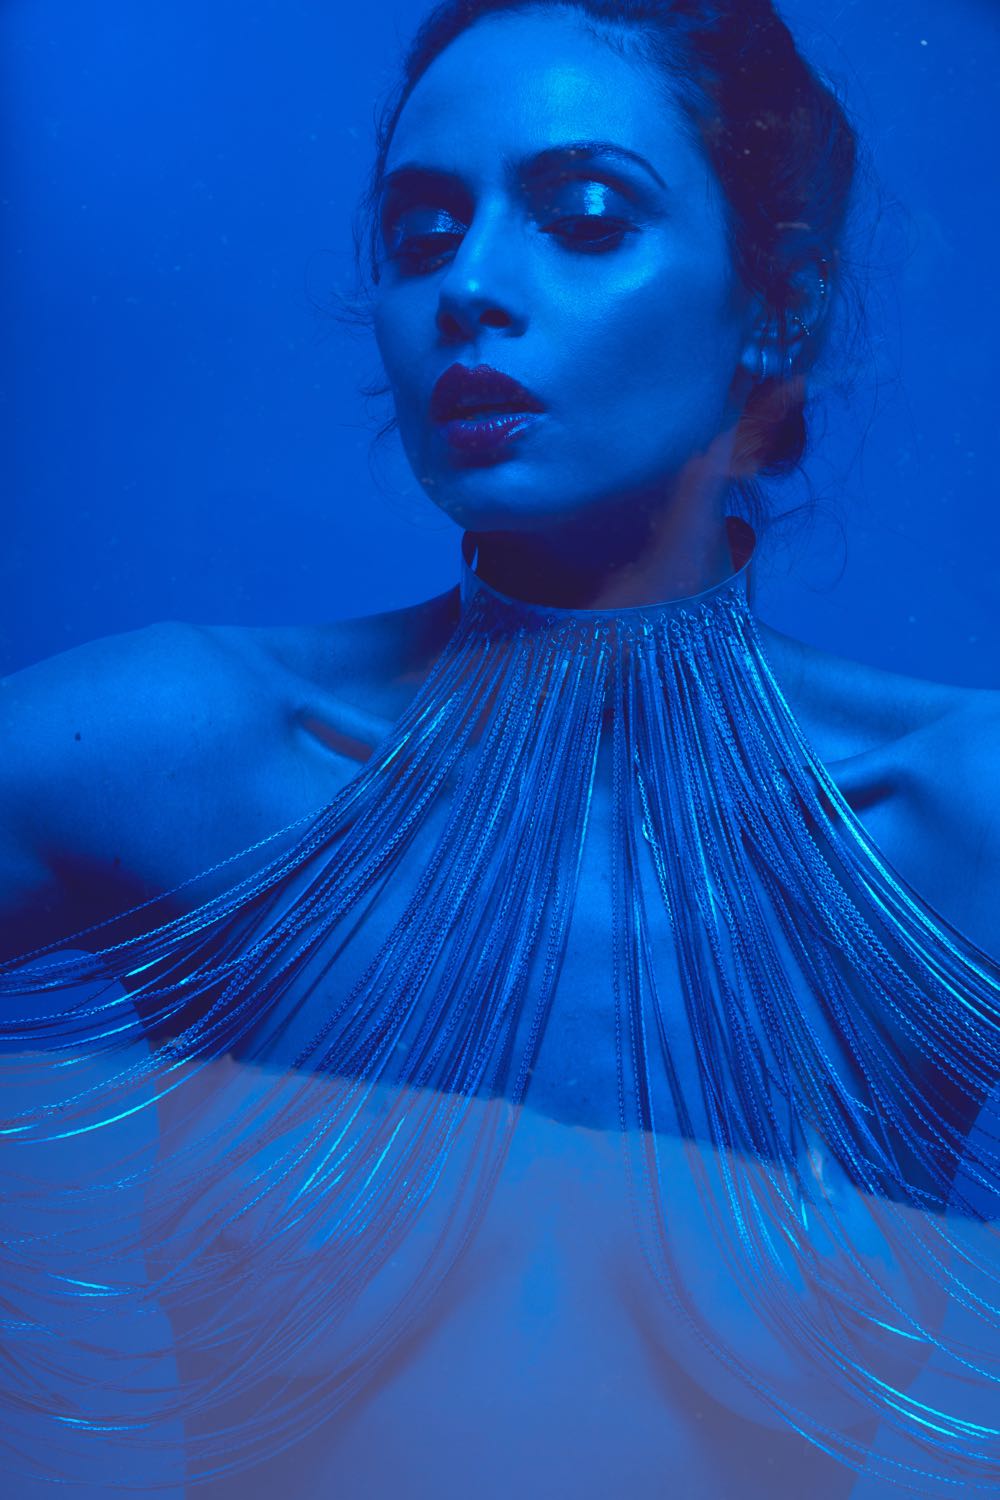 The Sabine Deep Blue Dream with Francesca Vannucci shot by Darian Zahedi